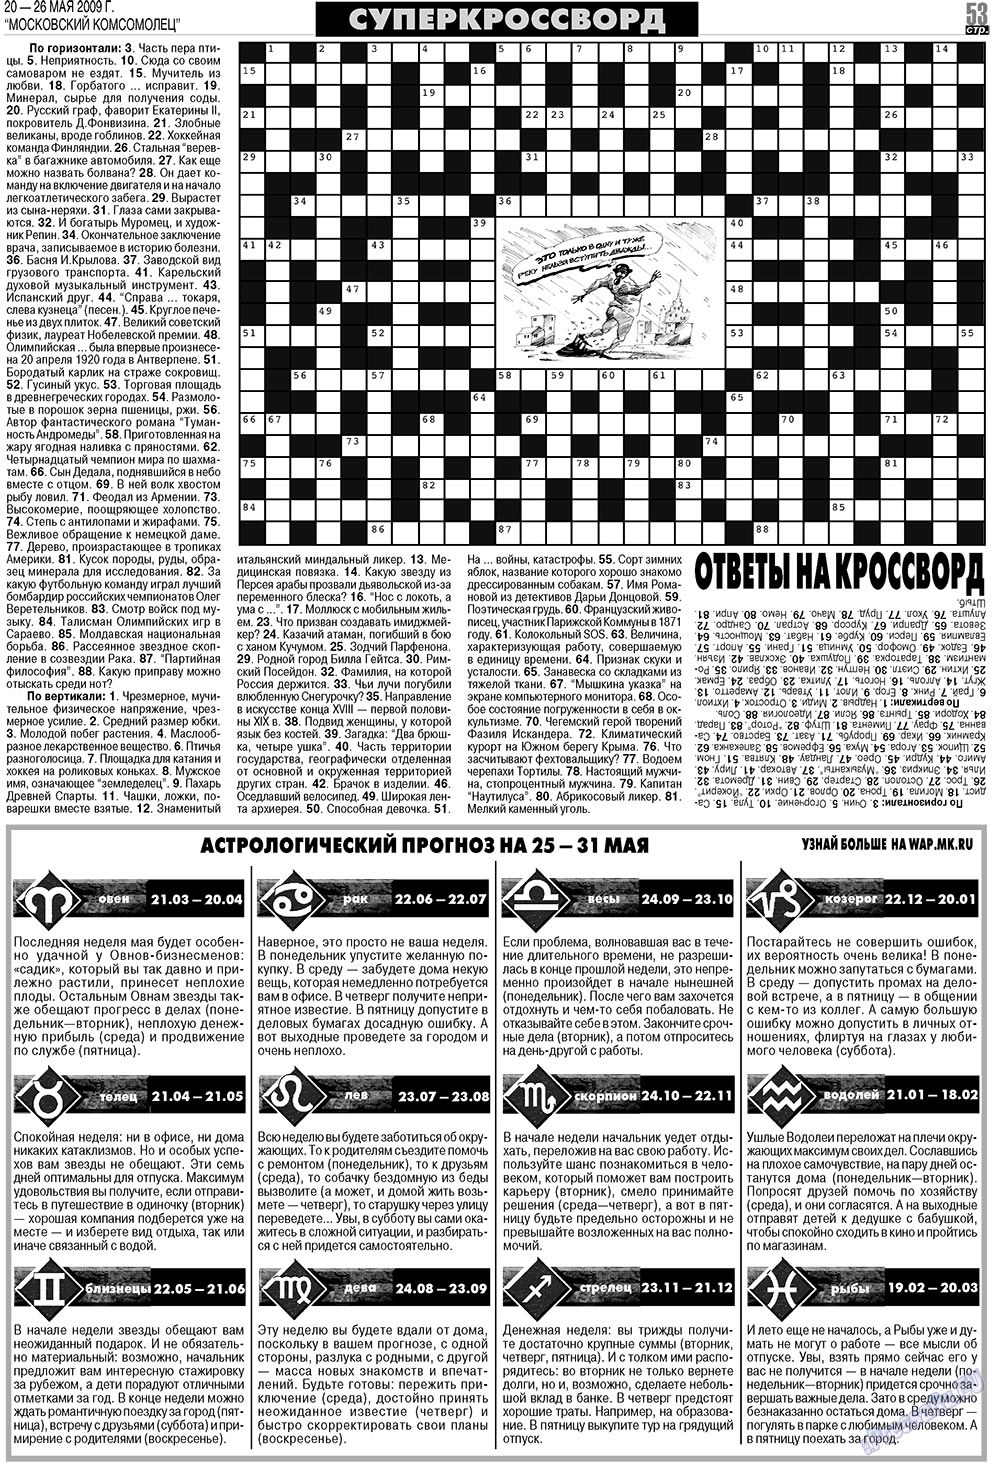 МК Испания (газета). 2009 год, номер 21, стр. 53